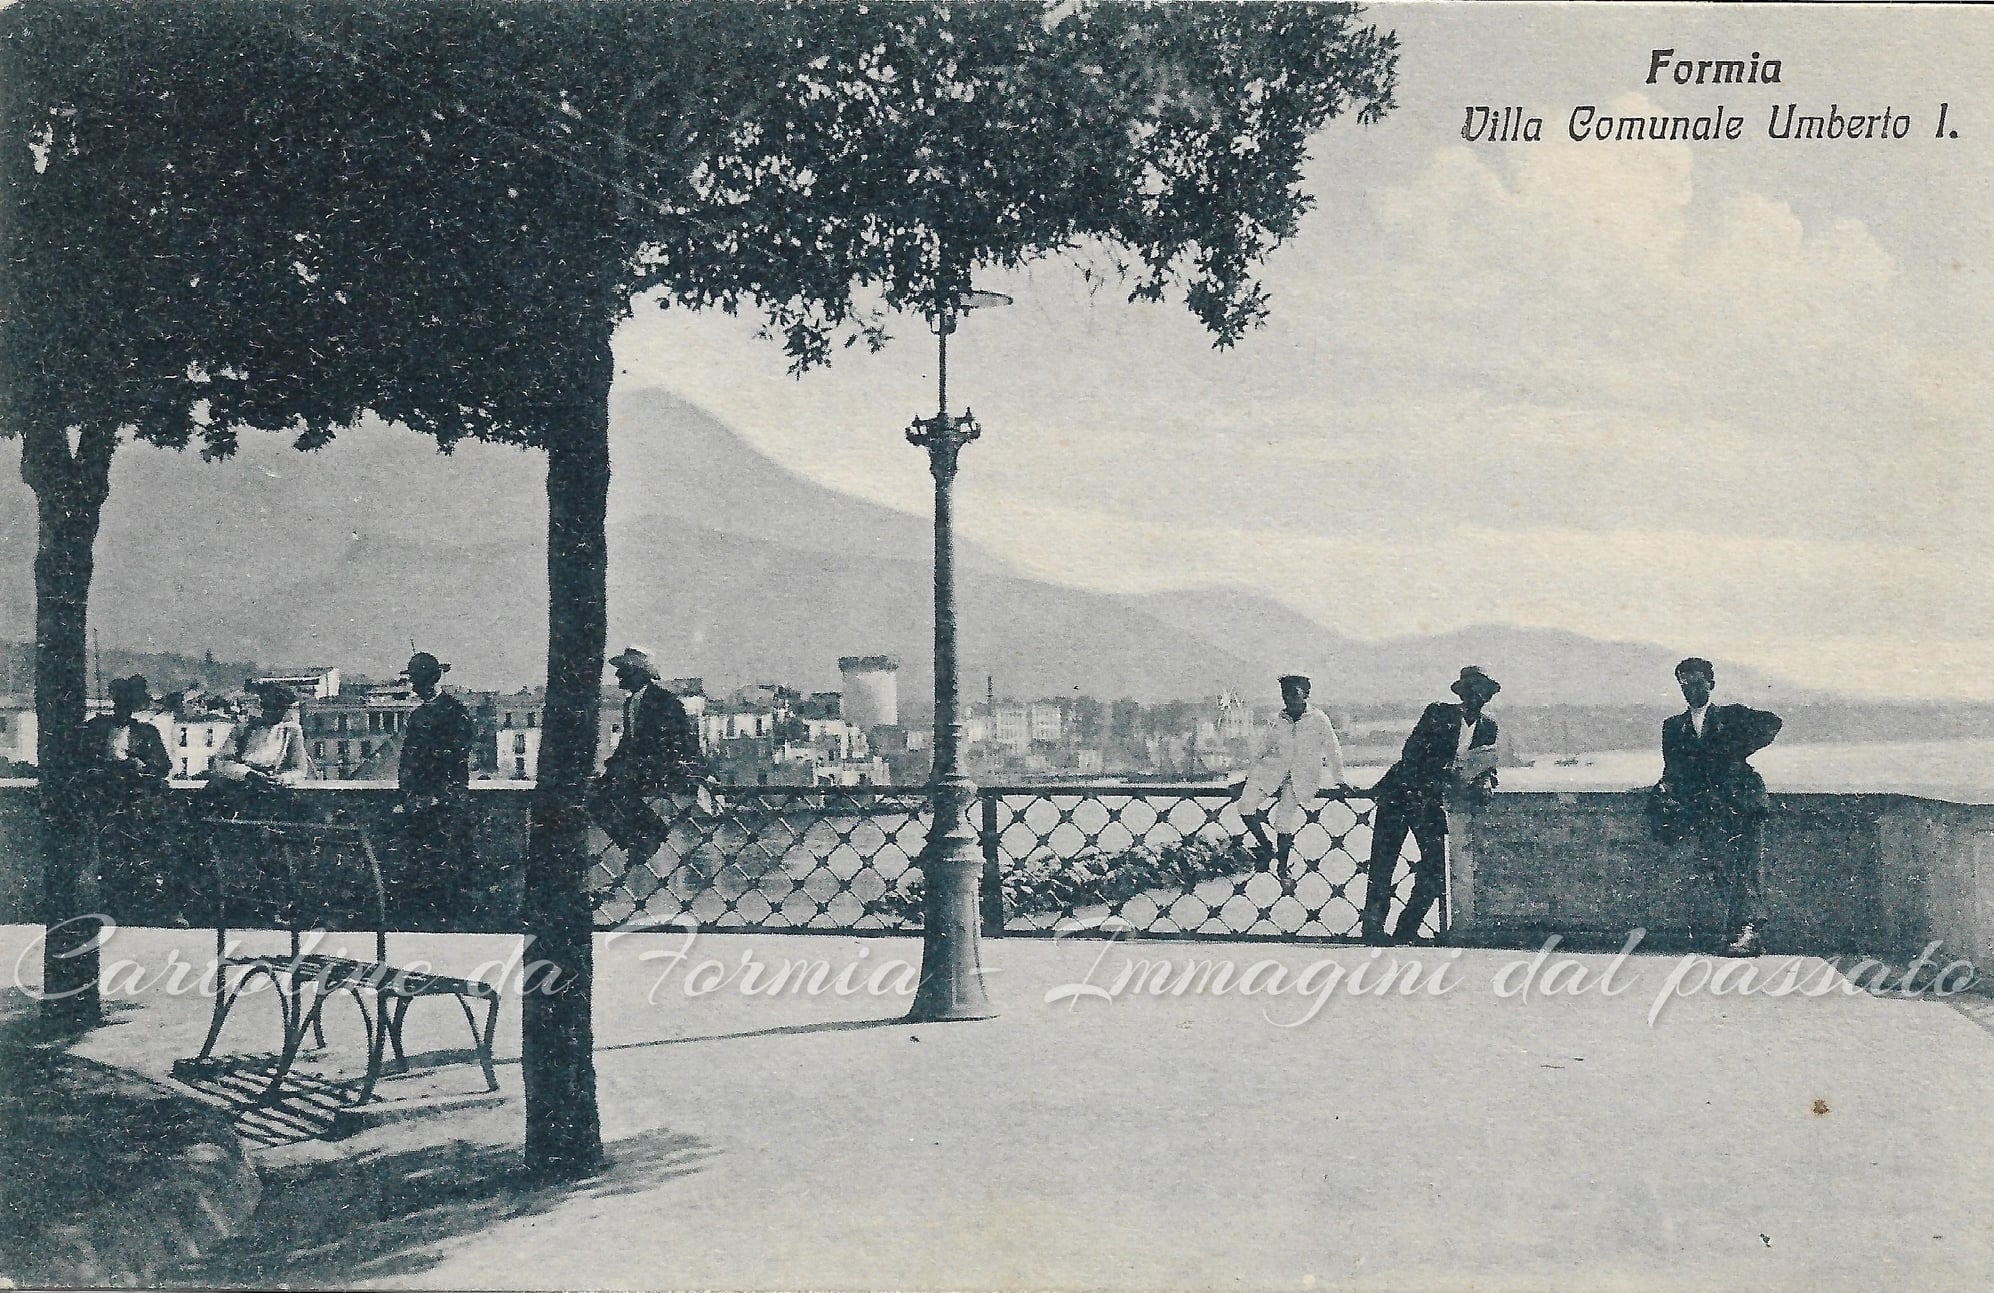 Villa Comunale Umberto I, Formia, 1925.